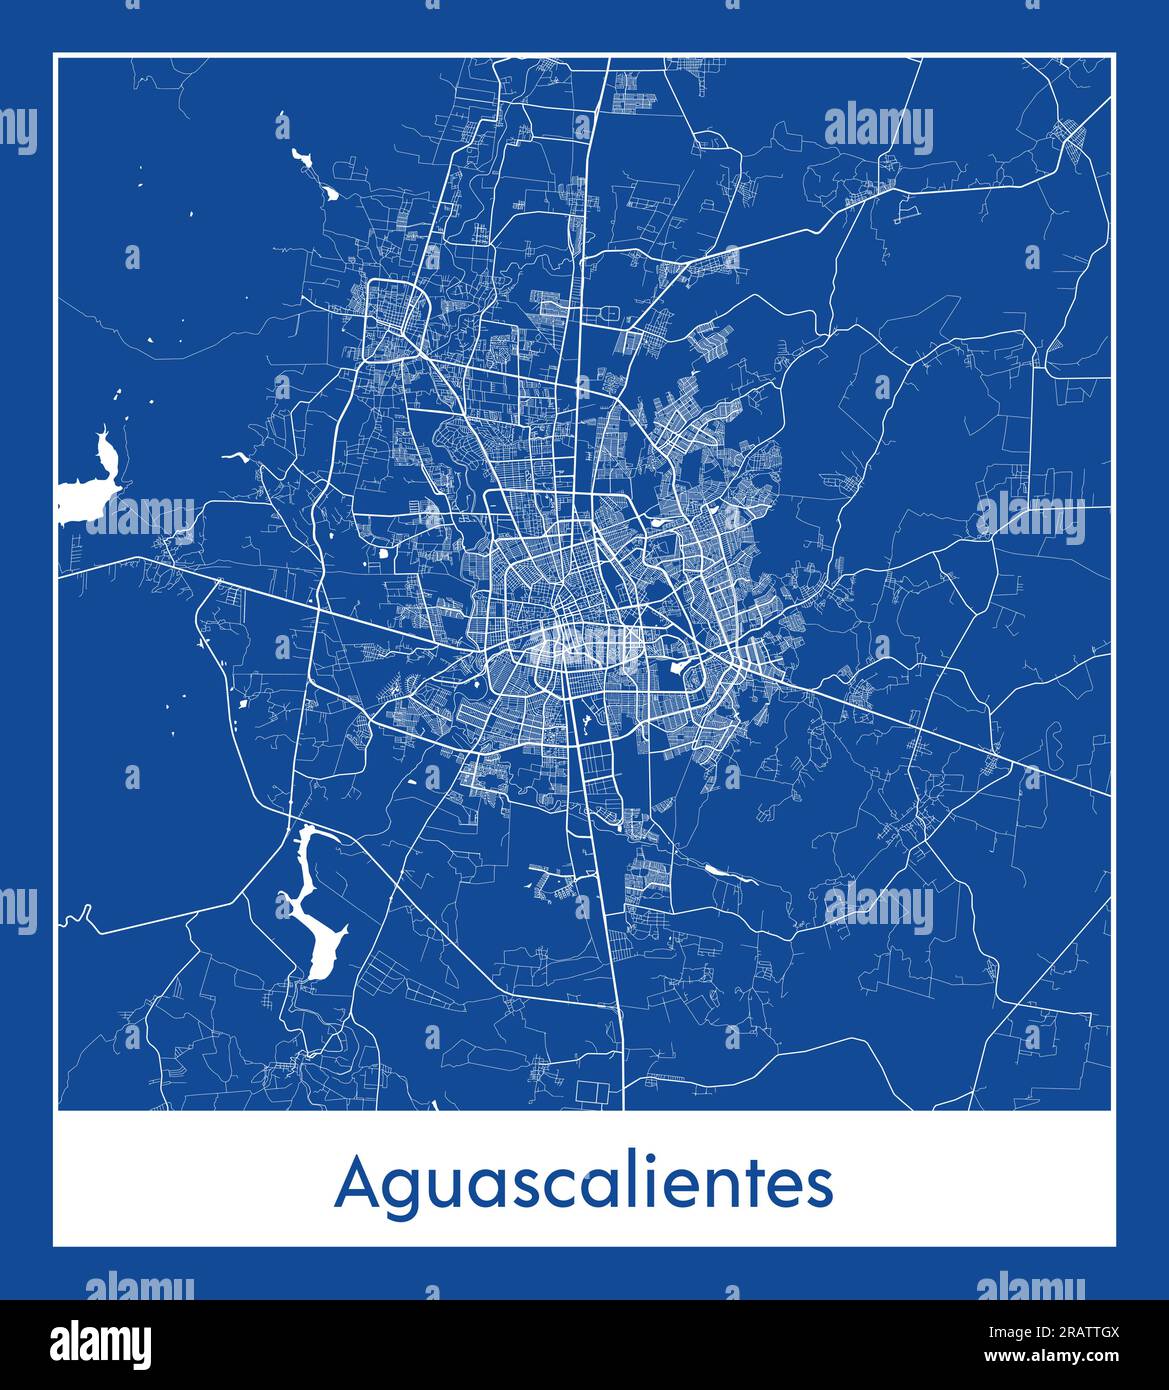 Aguascalientes Mexico North America City map blue print vector illustration Stock Vector